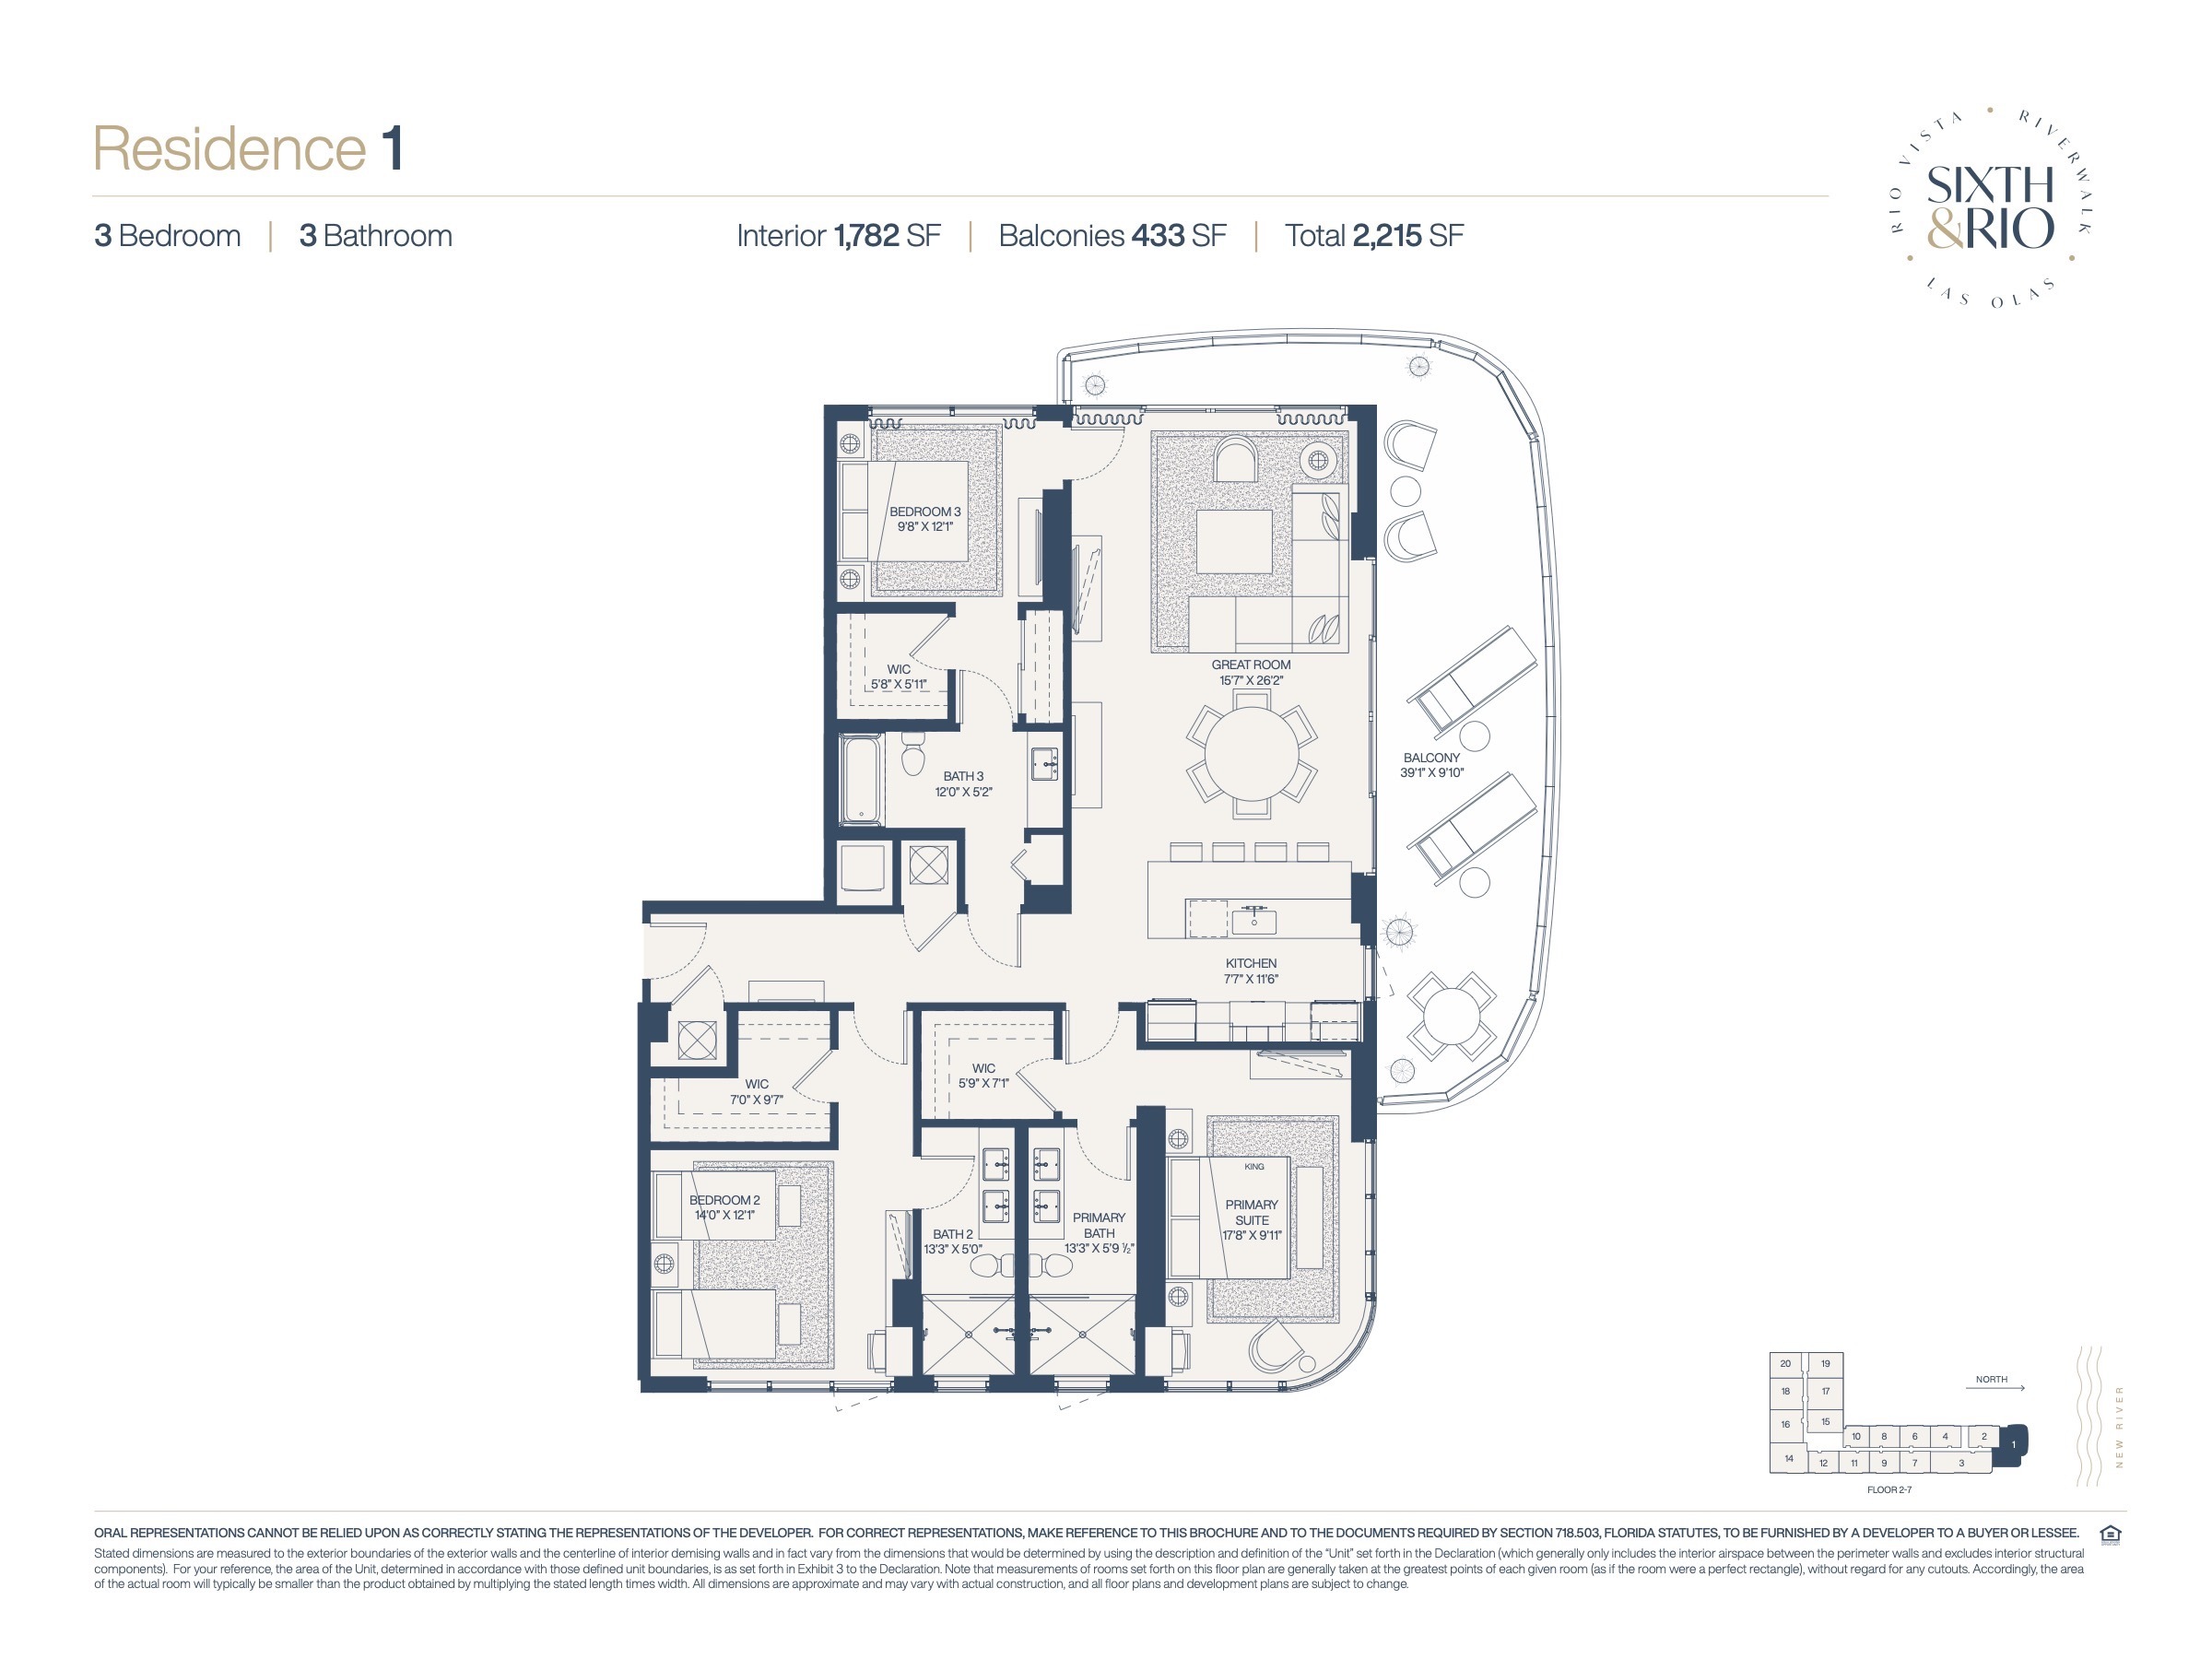 Floor Plan for Sixth & Rio Fort Lauderdale Floorplans, Residence 1